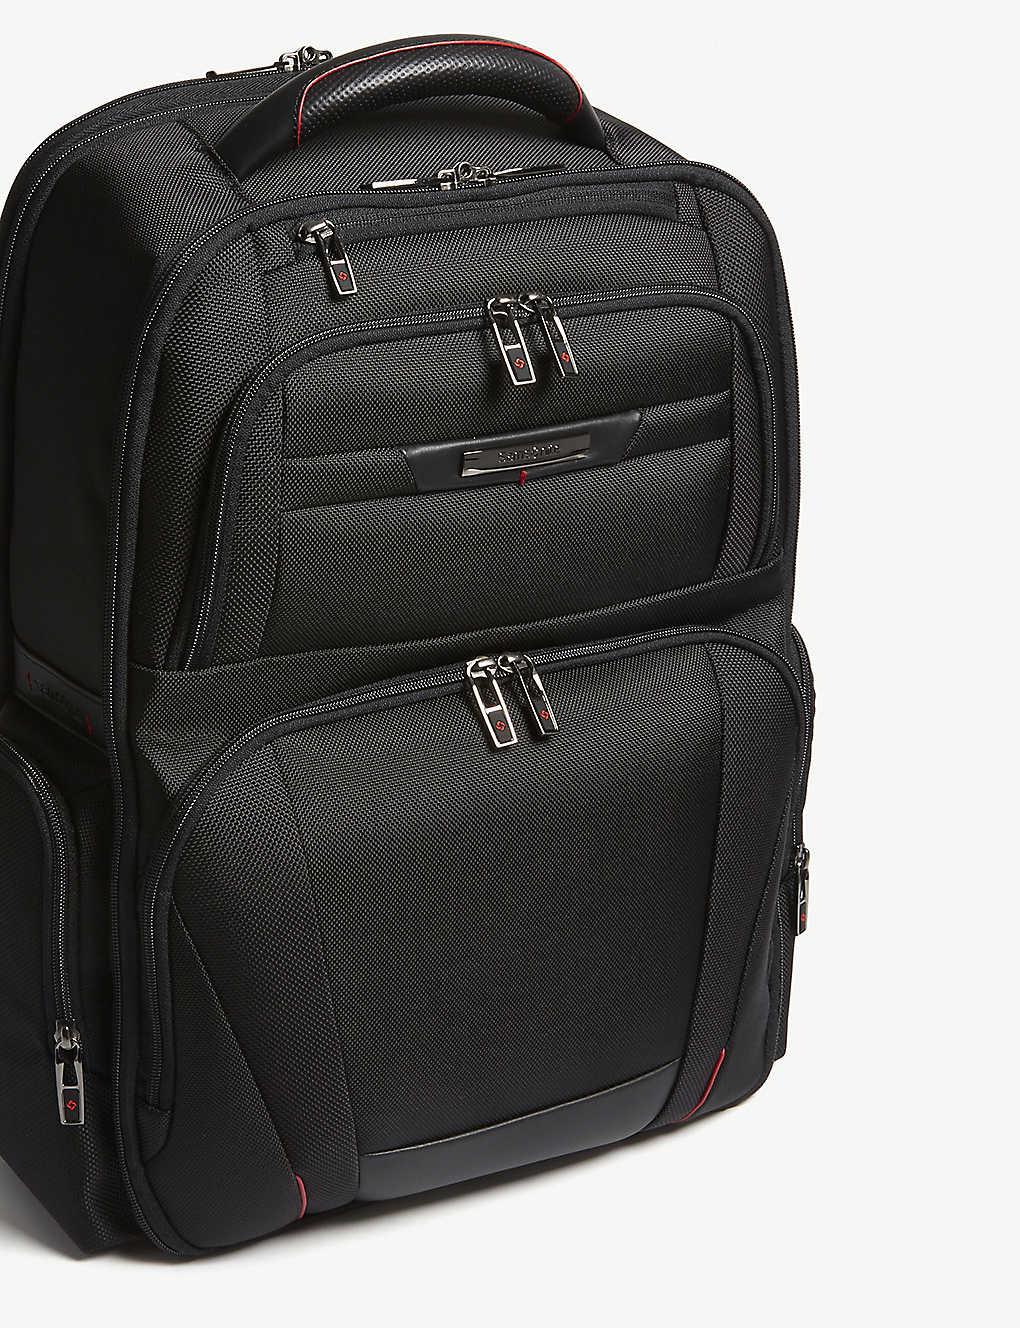 Samsonite Black Pro-dlx 5 17.3" Laptop Backpack | Lyst